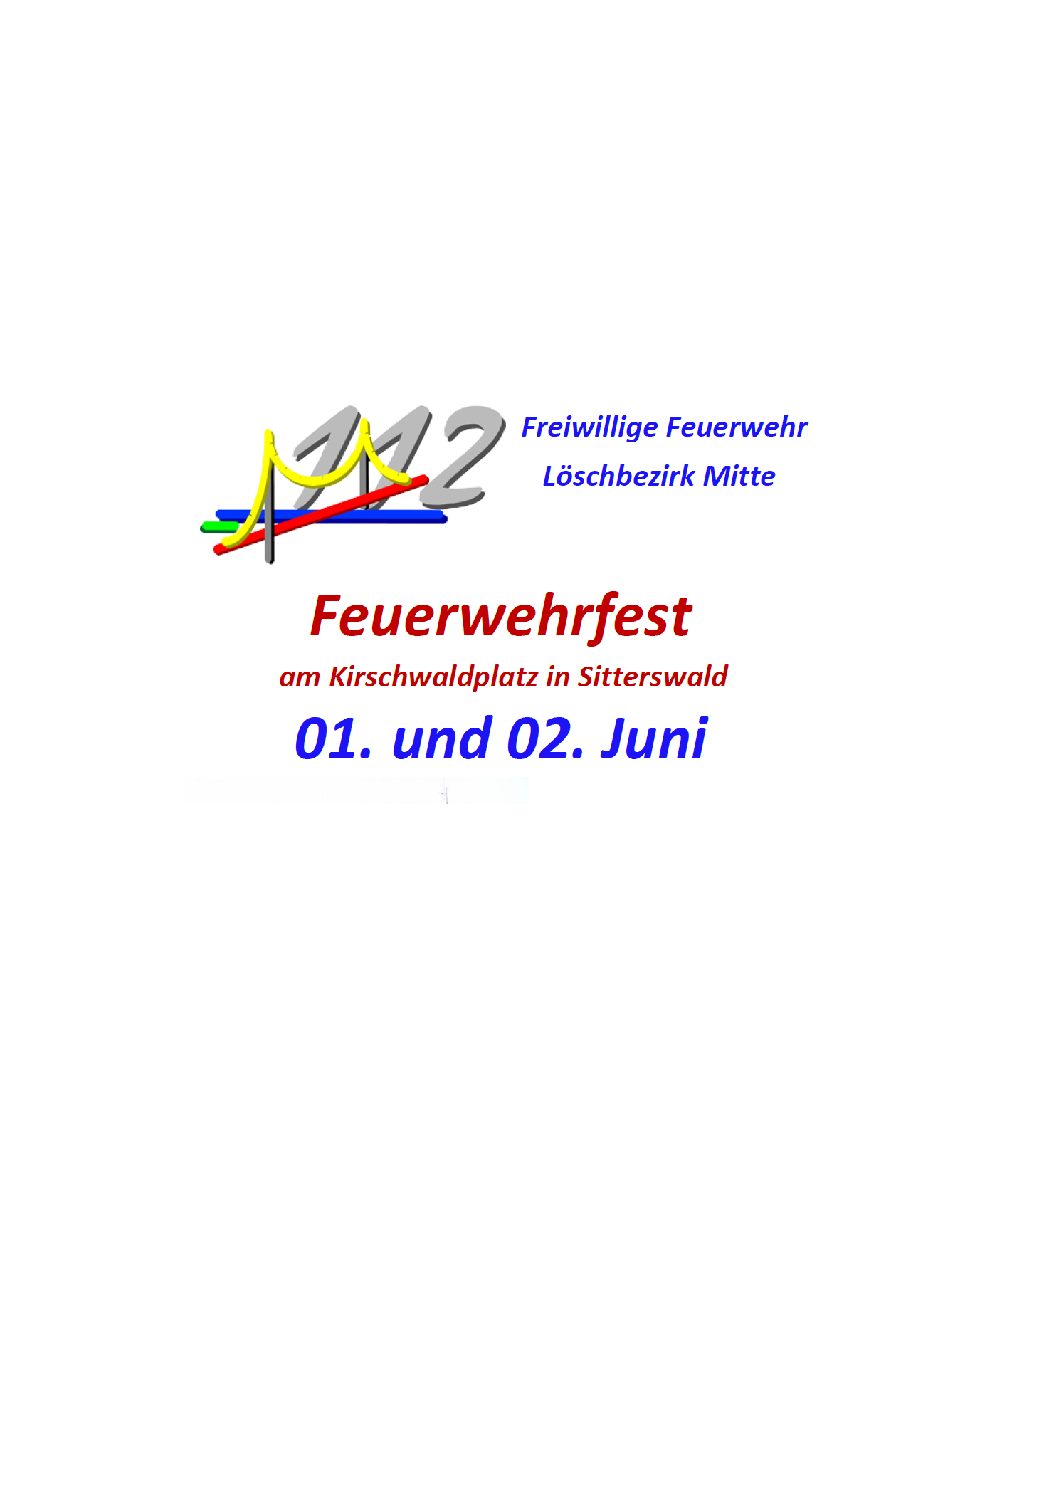 Feuerwehrfest in Sitterswald